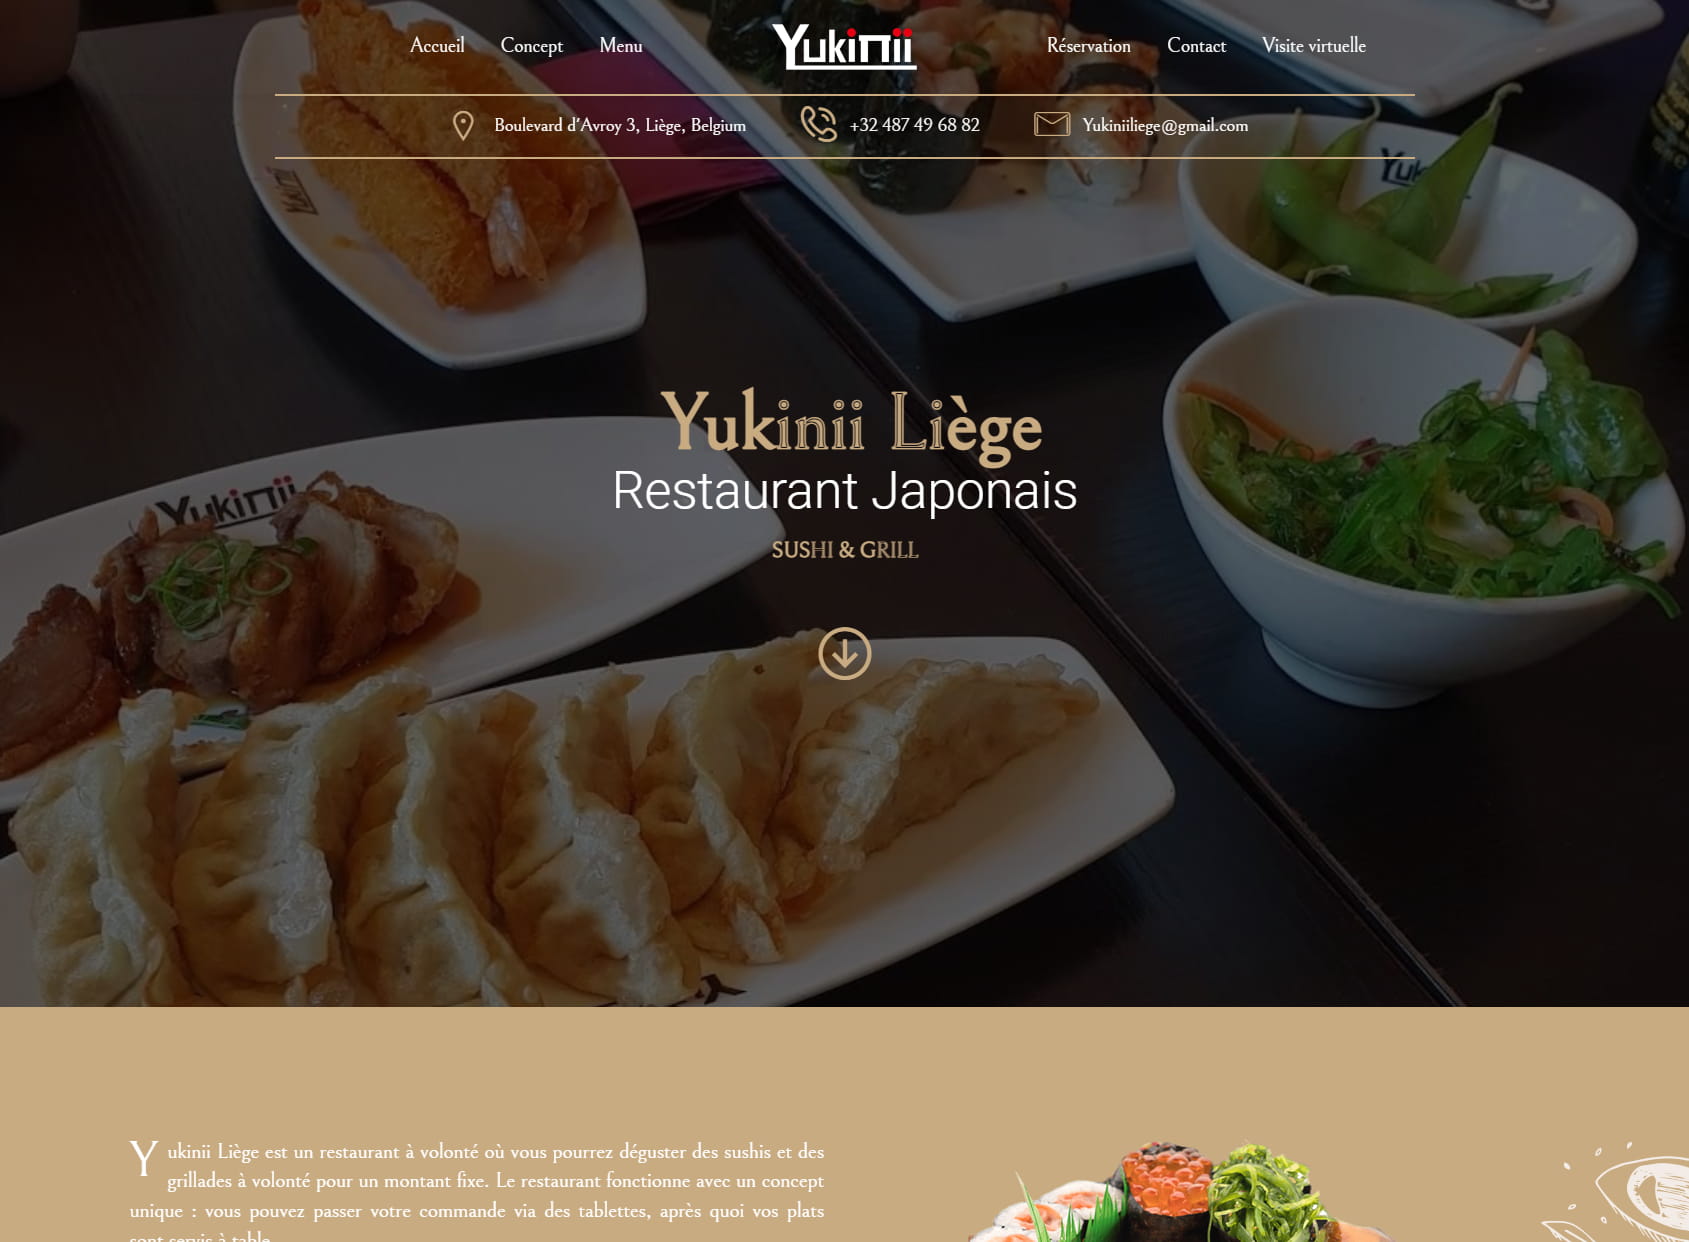 Yukinii Liège (all you can eat)